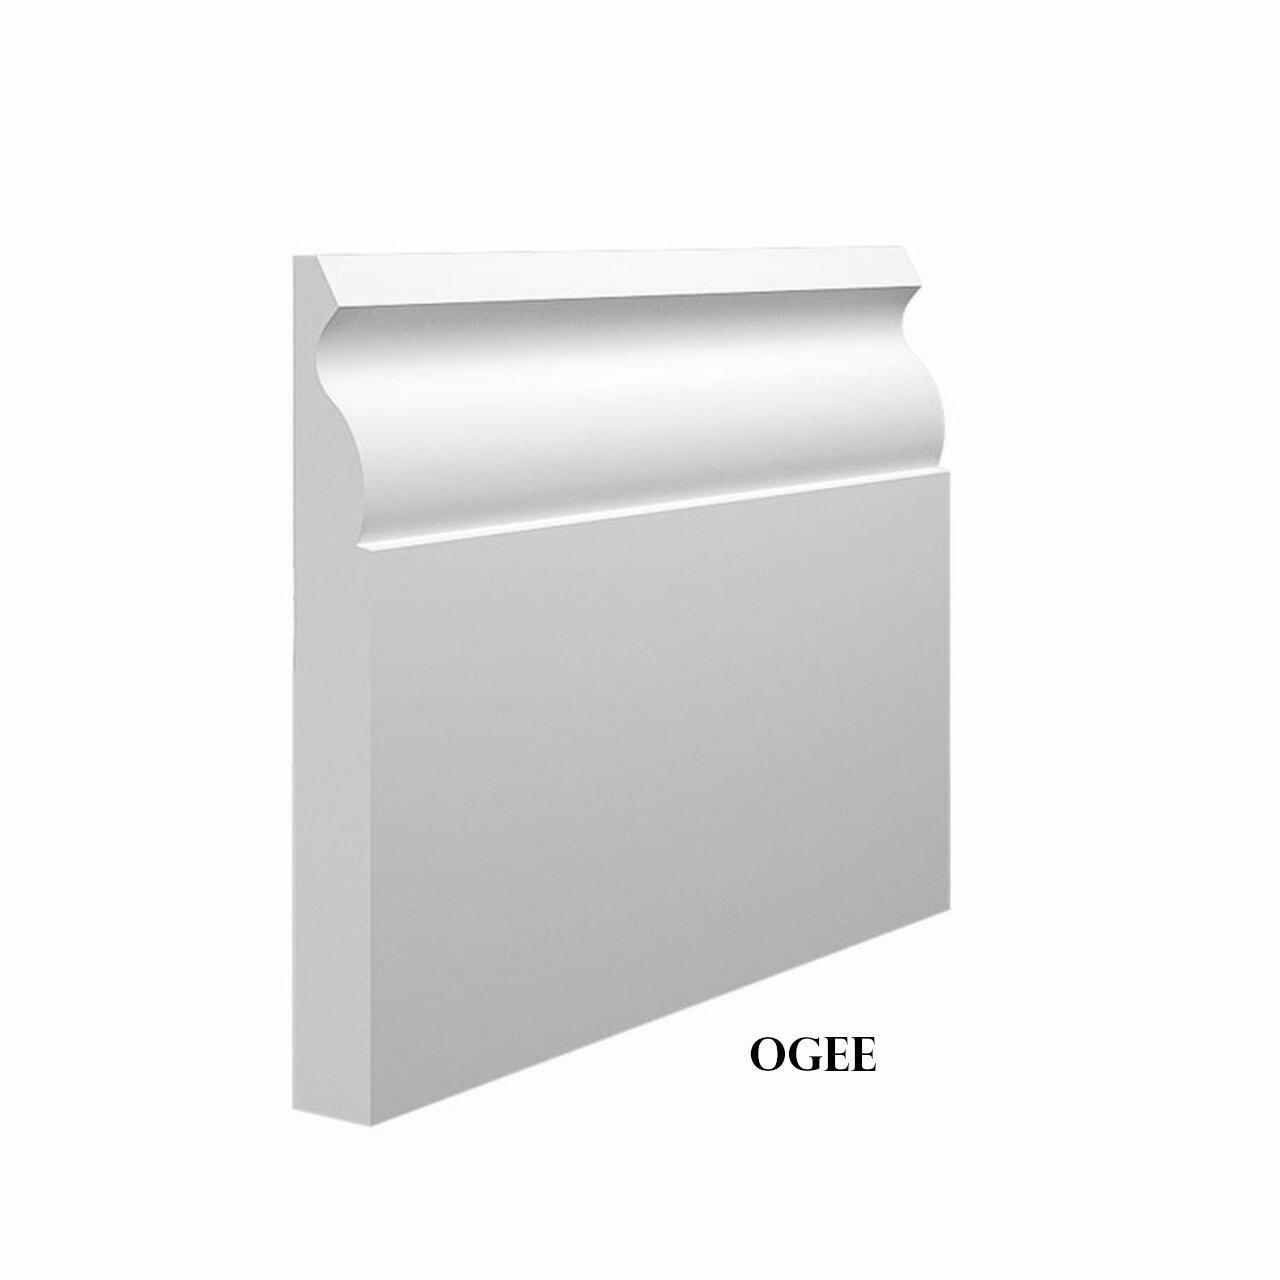 Ogee - White Primed MDF Skirting & Architrave